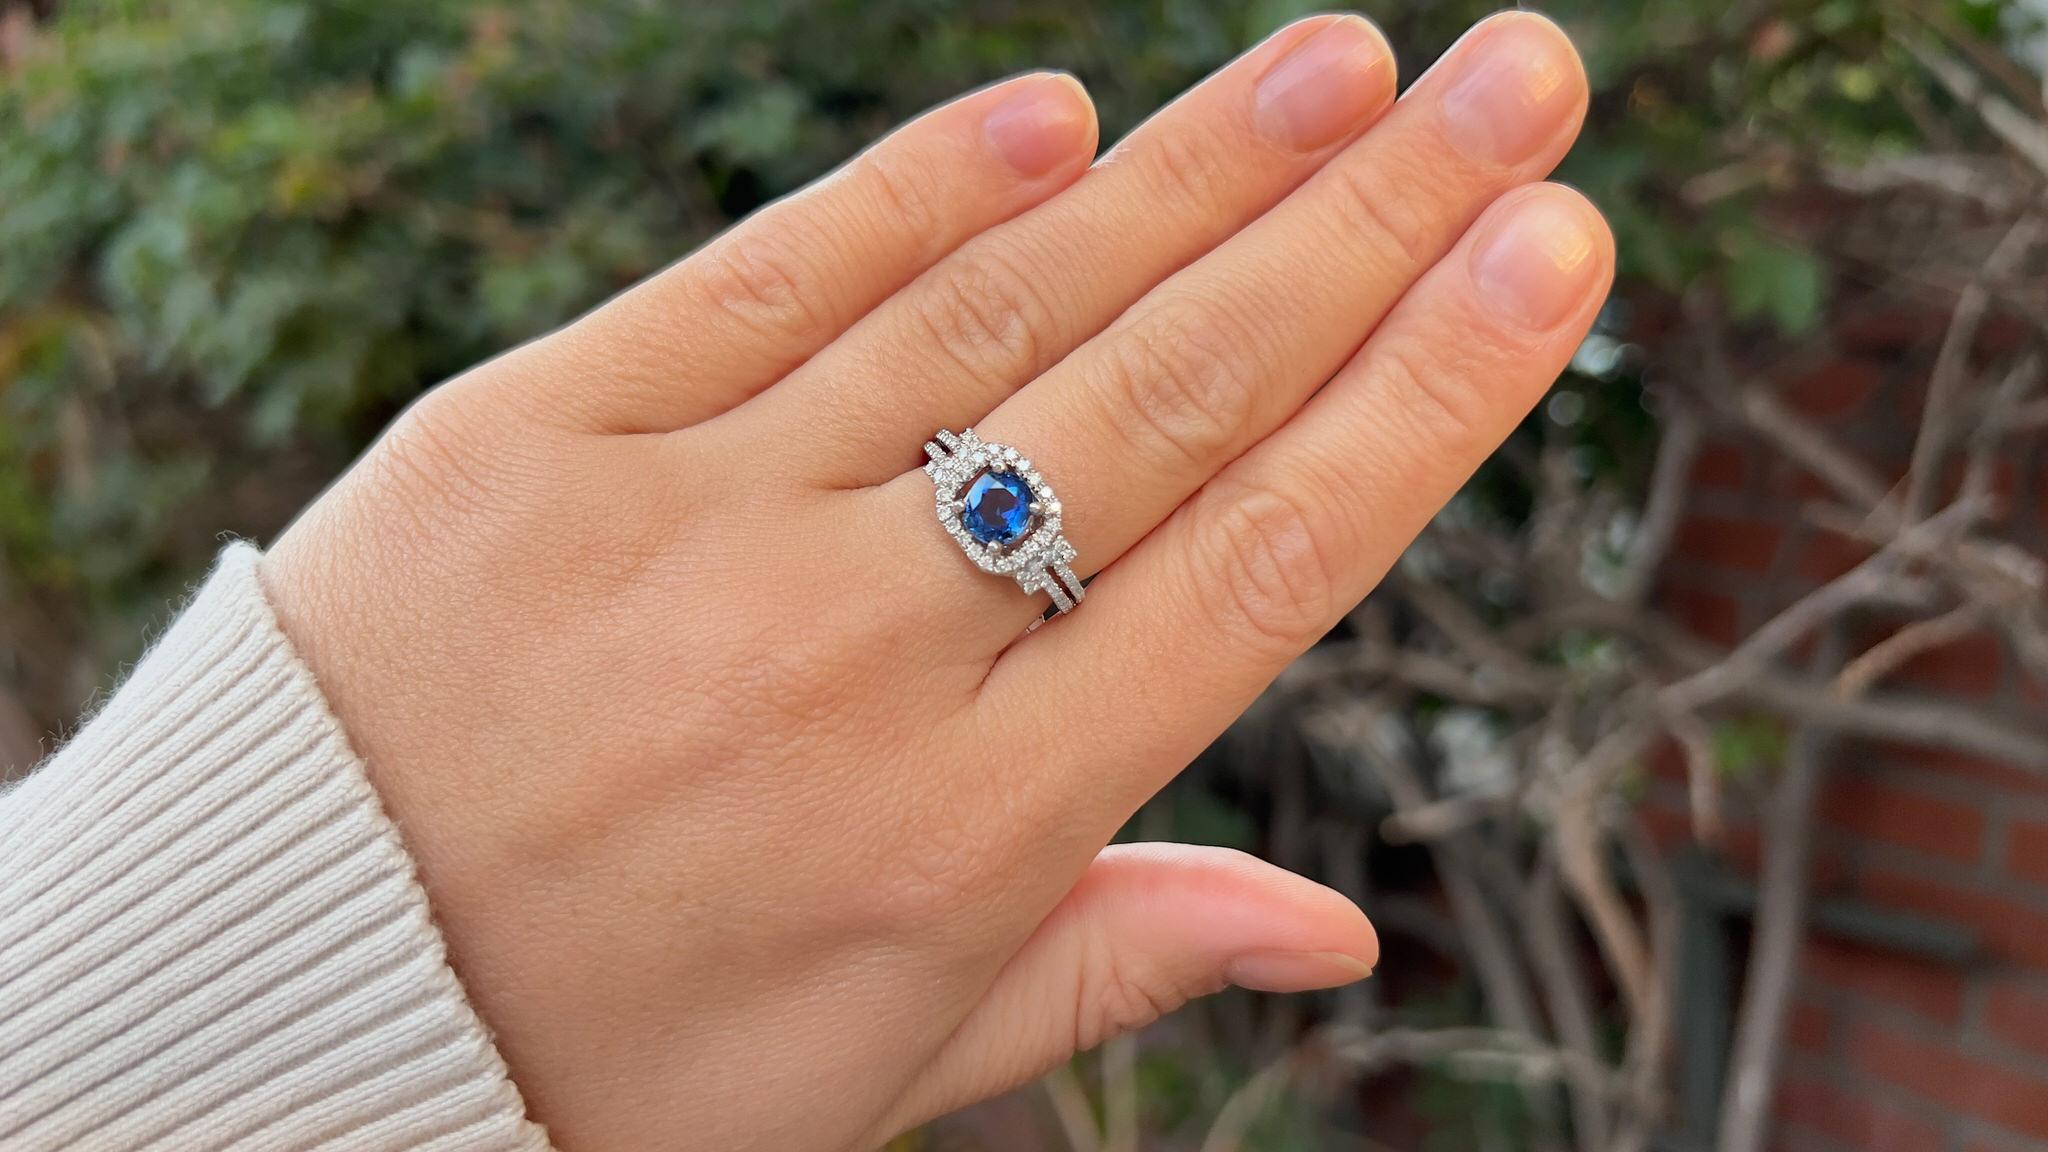 Sapphire = 1.08 Carat
(Cut: Round, Color: Blue, Origin: Natural)
Diamond = 0.48 Carats
(Cut: Round, Color: F, Clarity: VS)
Metal = 18K White Gold
Ring Size = 6.5